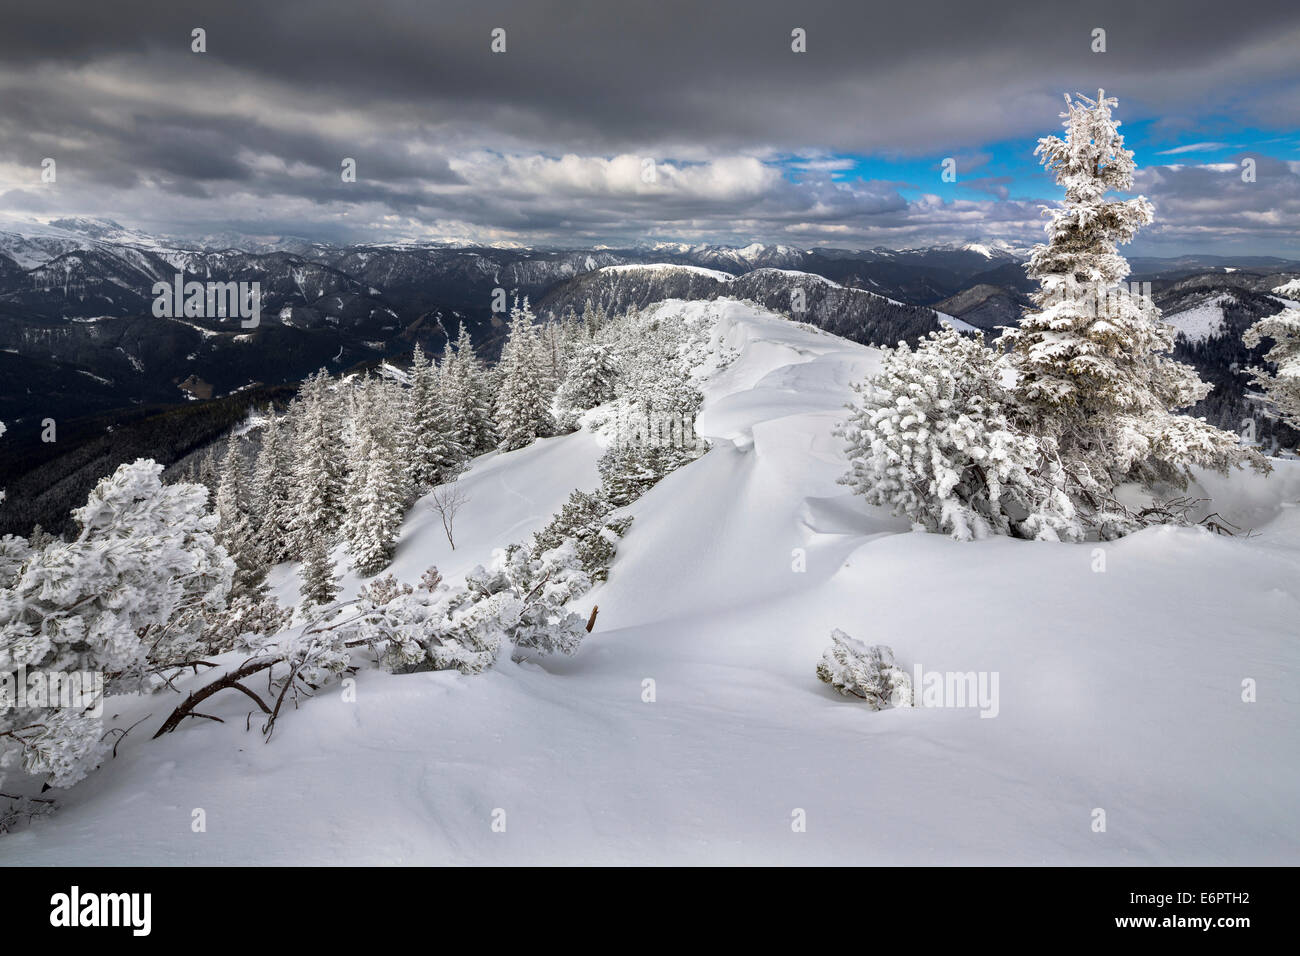 Mt Wildkamm with a winter forest covered in deep snow, Niederalpl, Mürzsteg Alps, Styria, Austria Stock Photo